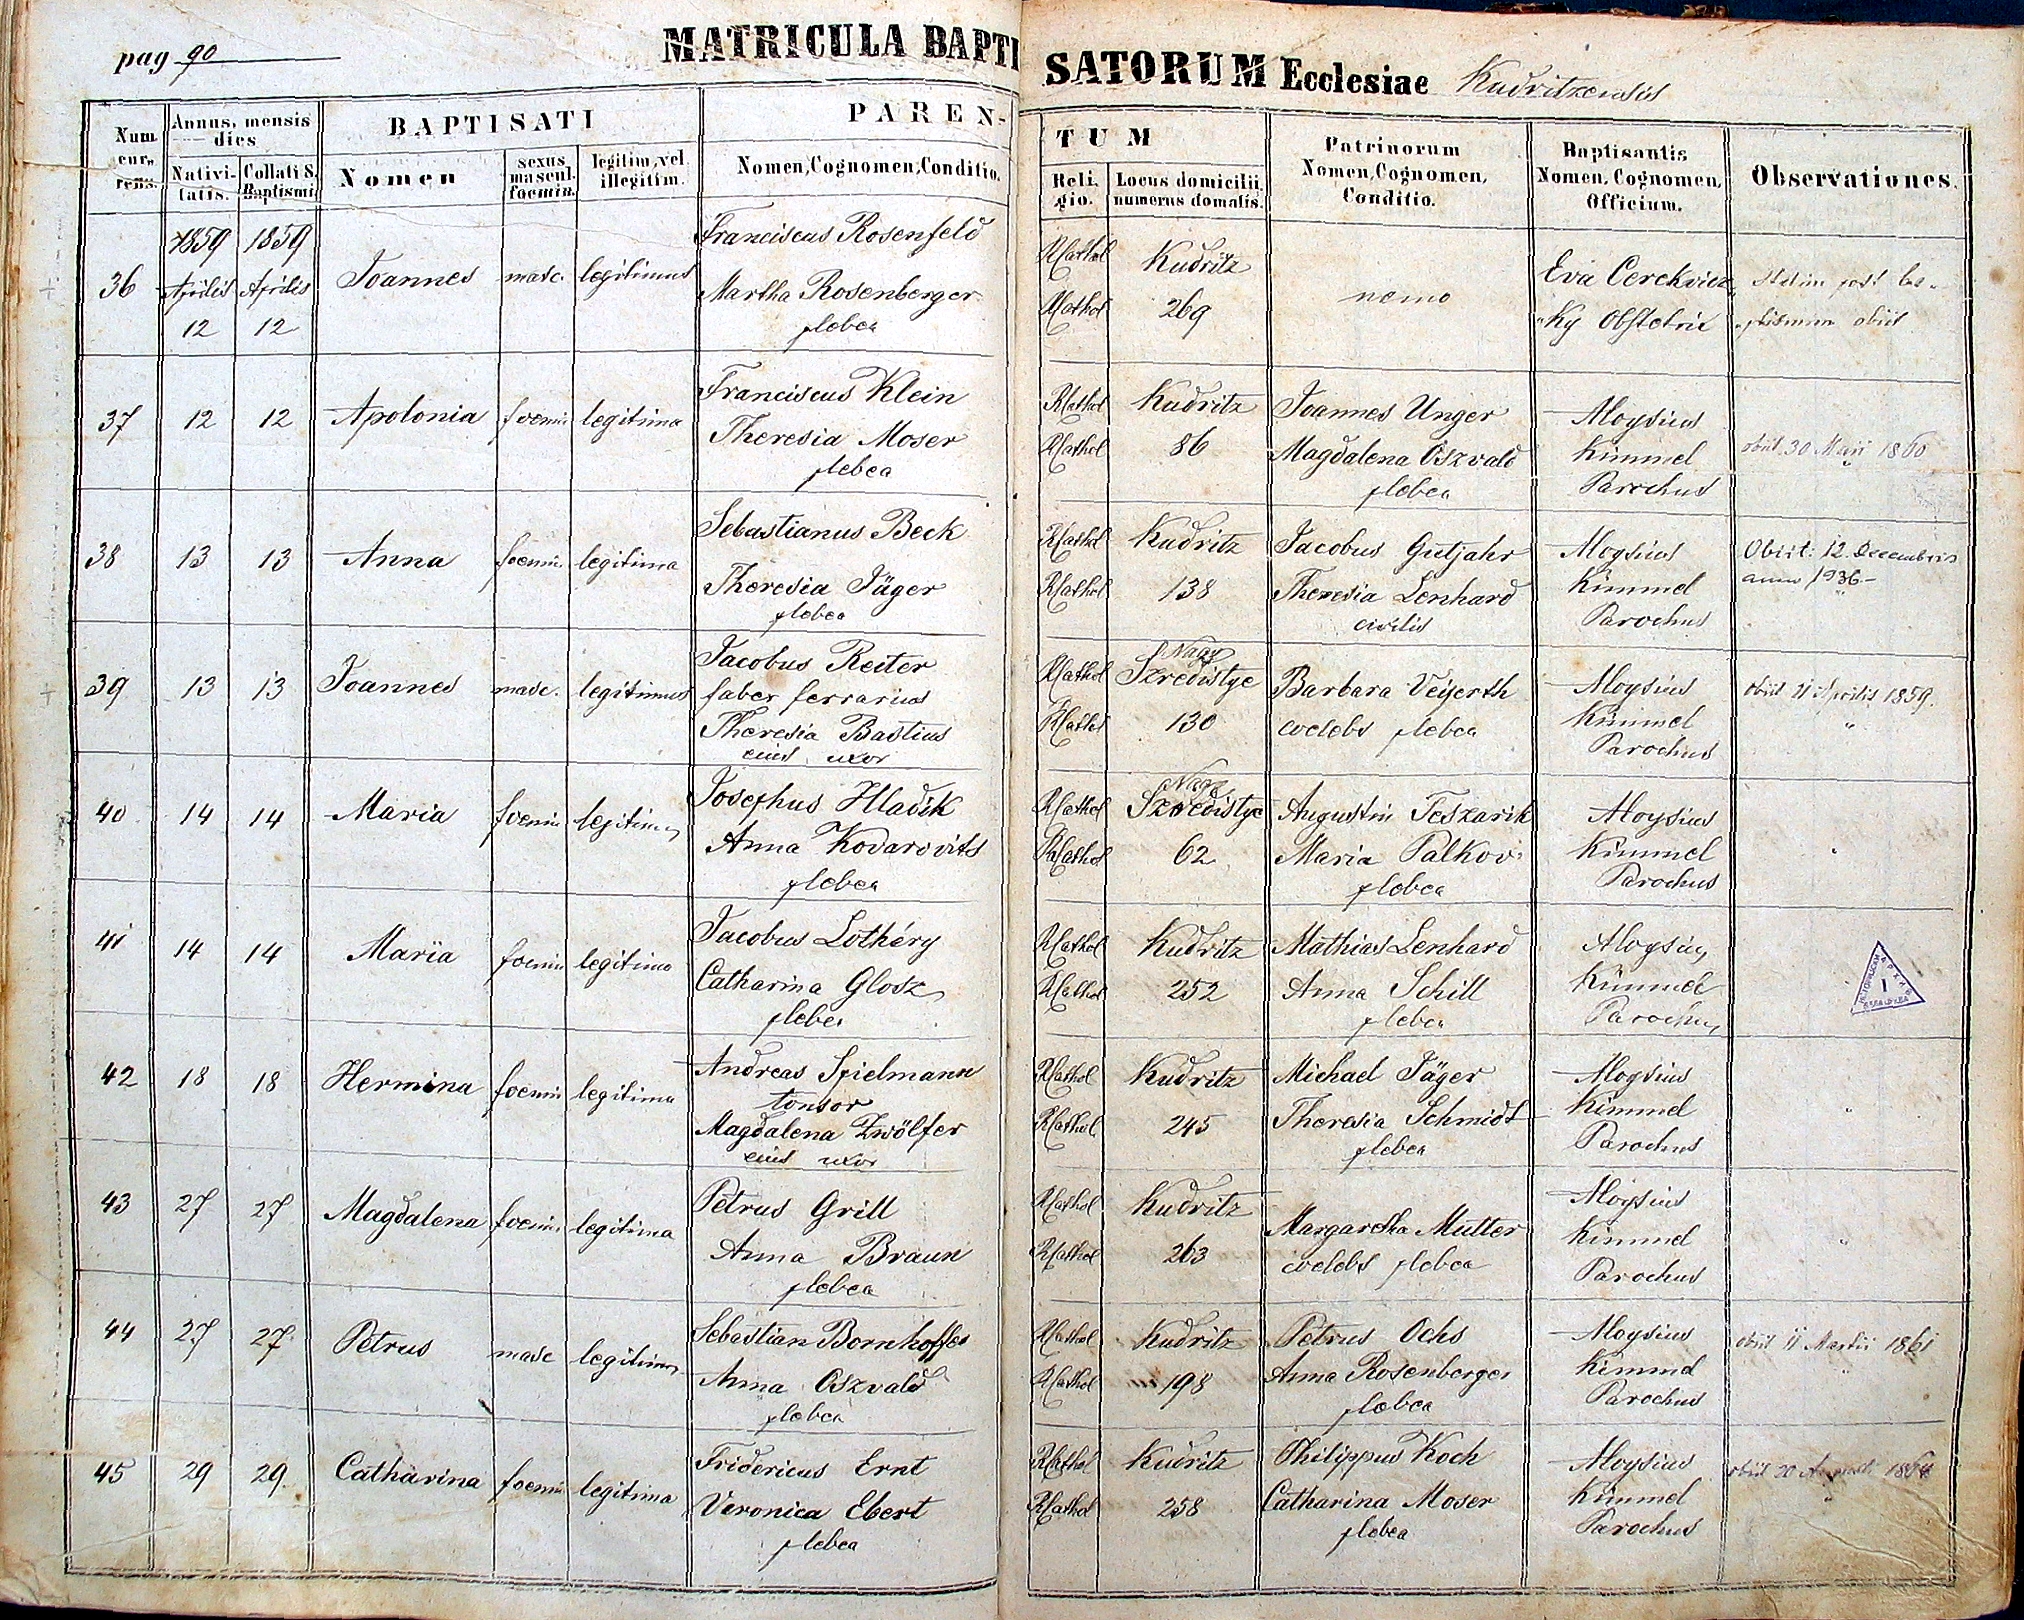 images/church_records/BIRTHS/1852-1870B/090